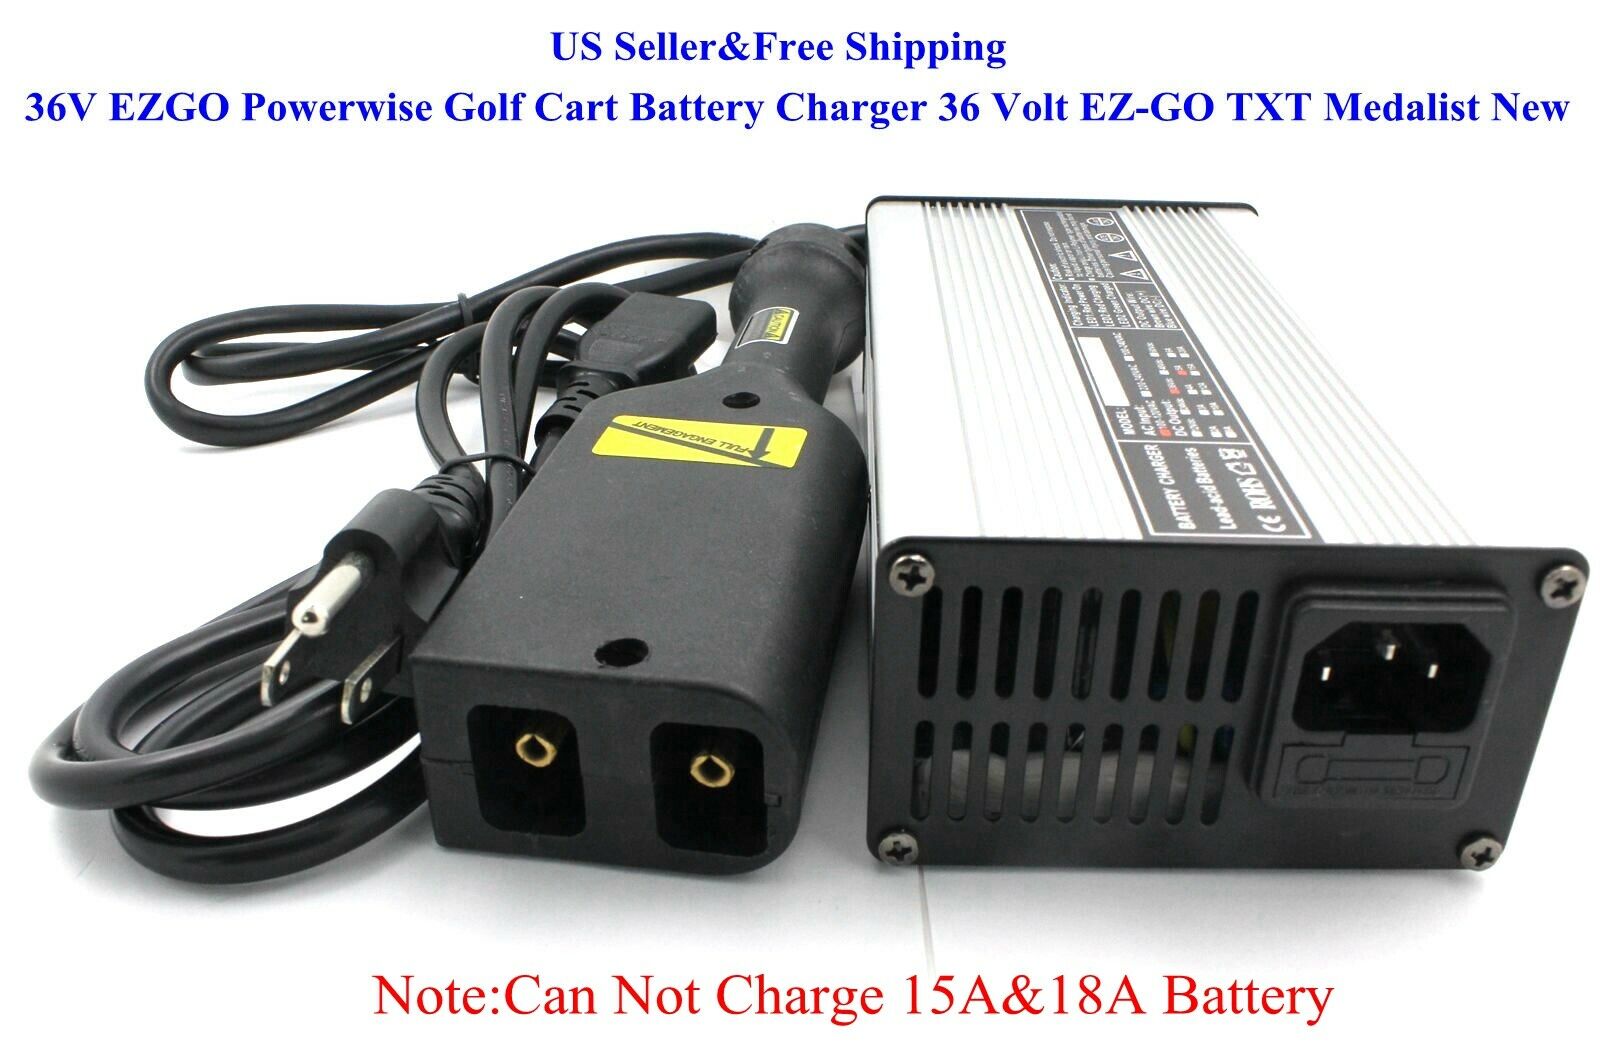 Us 36v 5a Ezgo Powerwise Golf Cart Battery Charger 36 Volt "d" Style Ez-go Txt